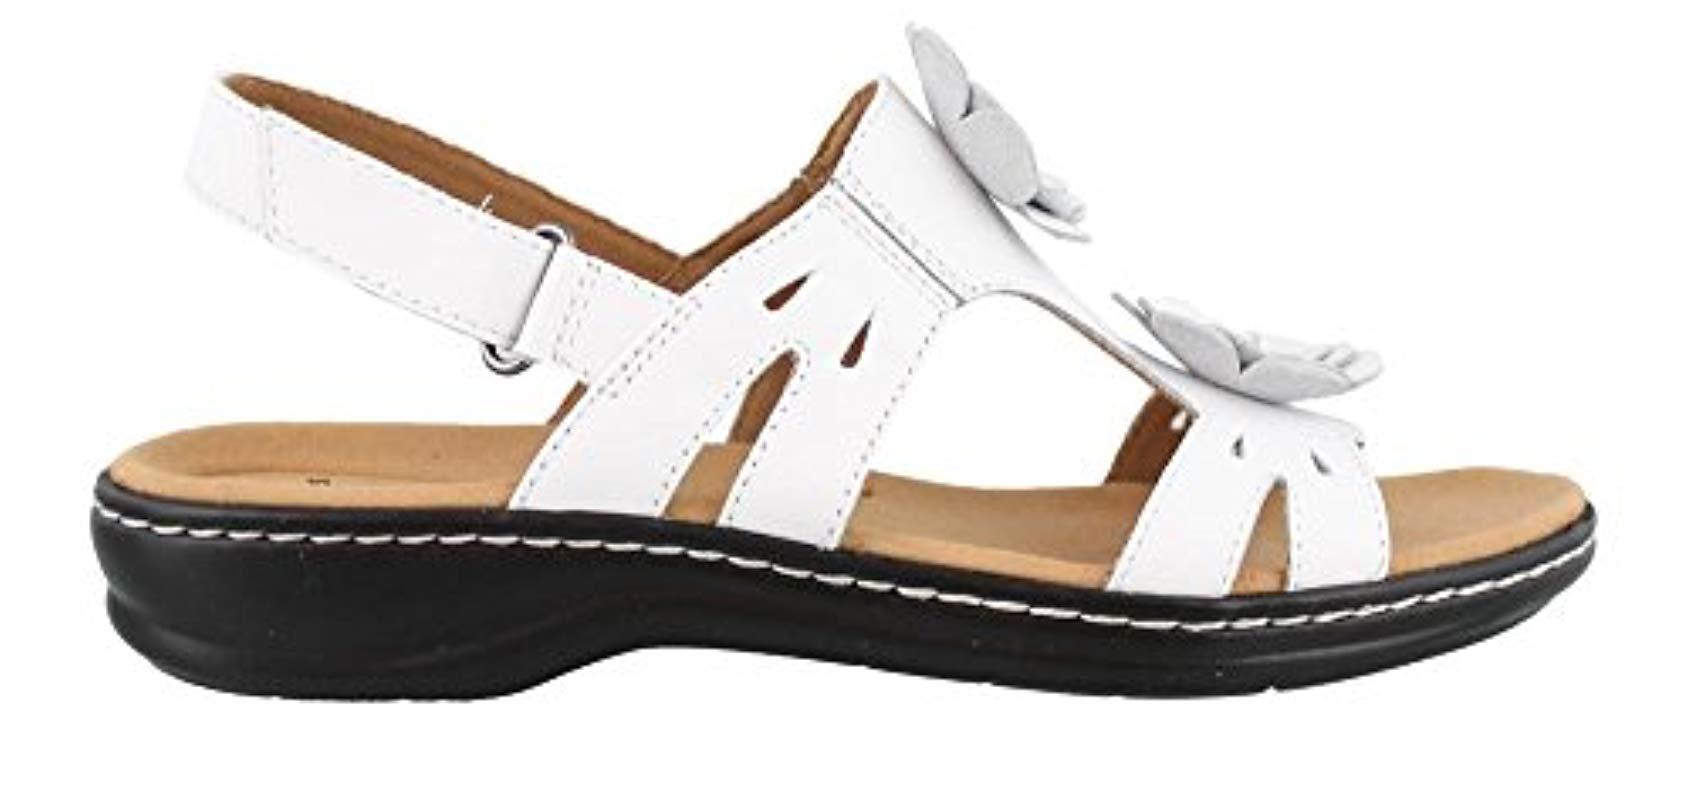 clarks white flat sandals